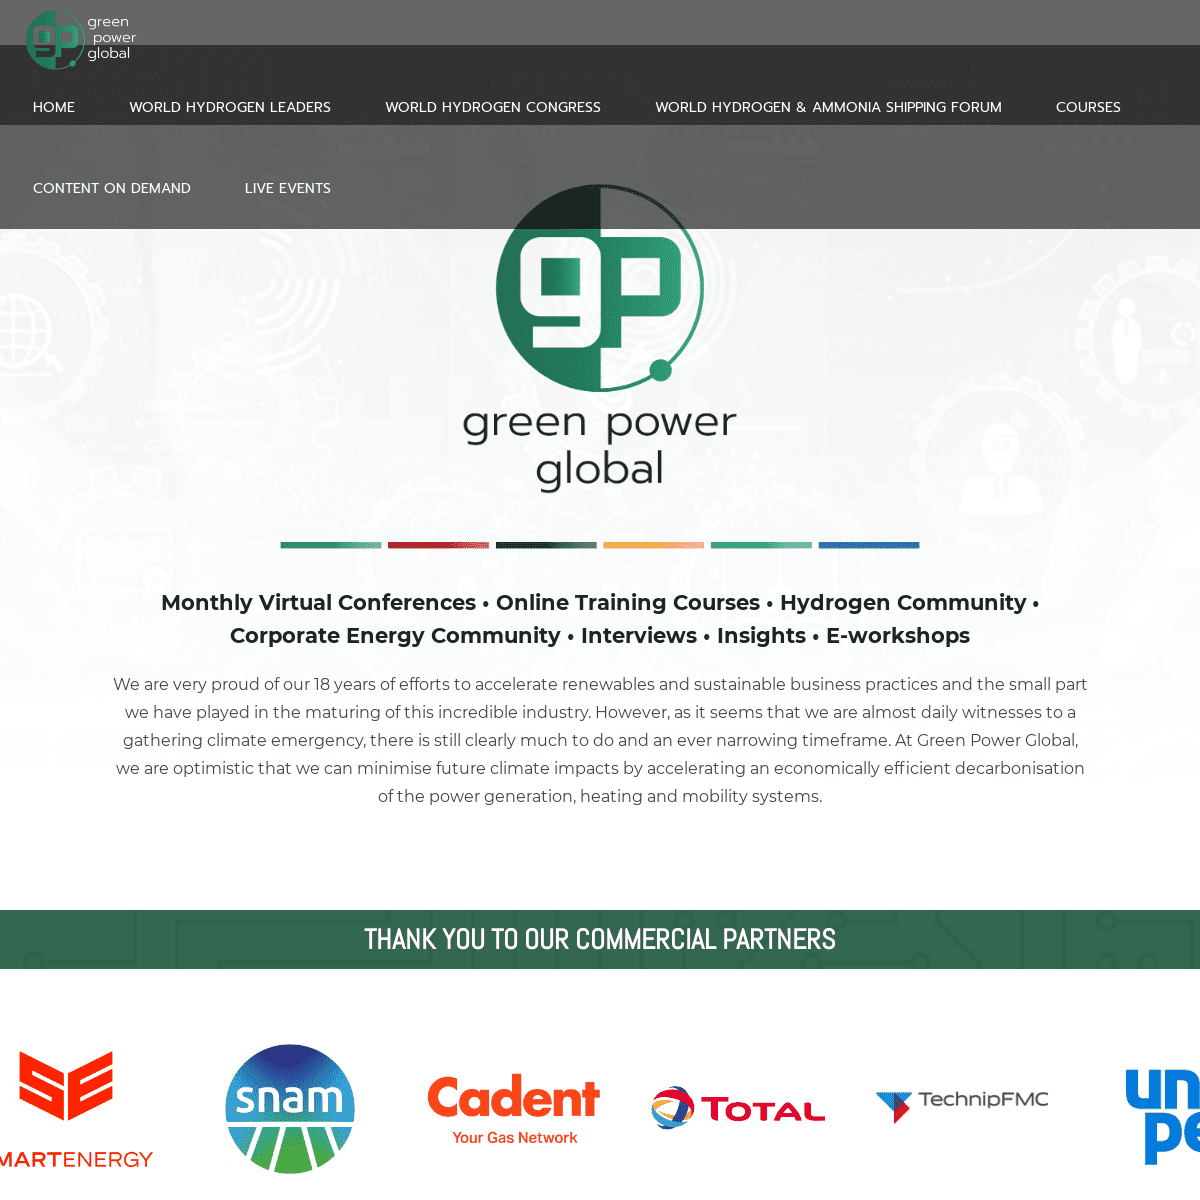 A complete backup of greenpowerglobal.com